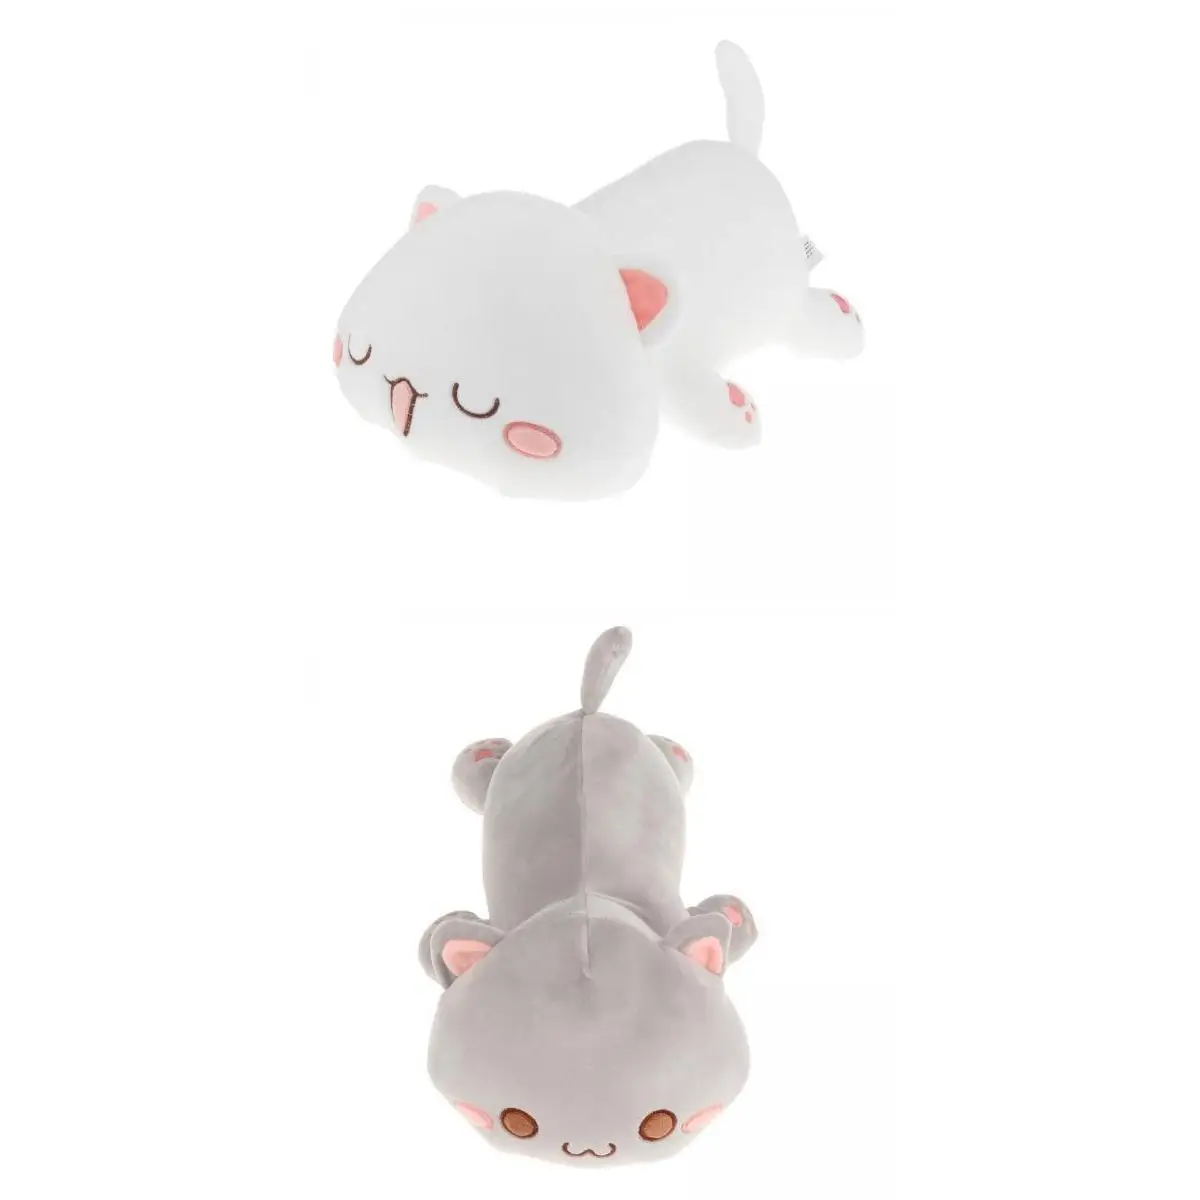 2x Soft Cat Stuffed Cute Animal Plush Pillow Toy for Kids Children Gift